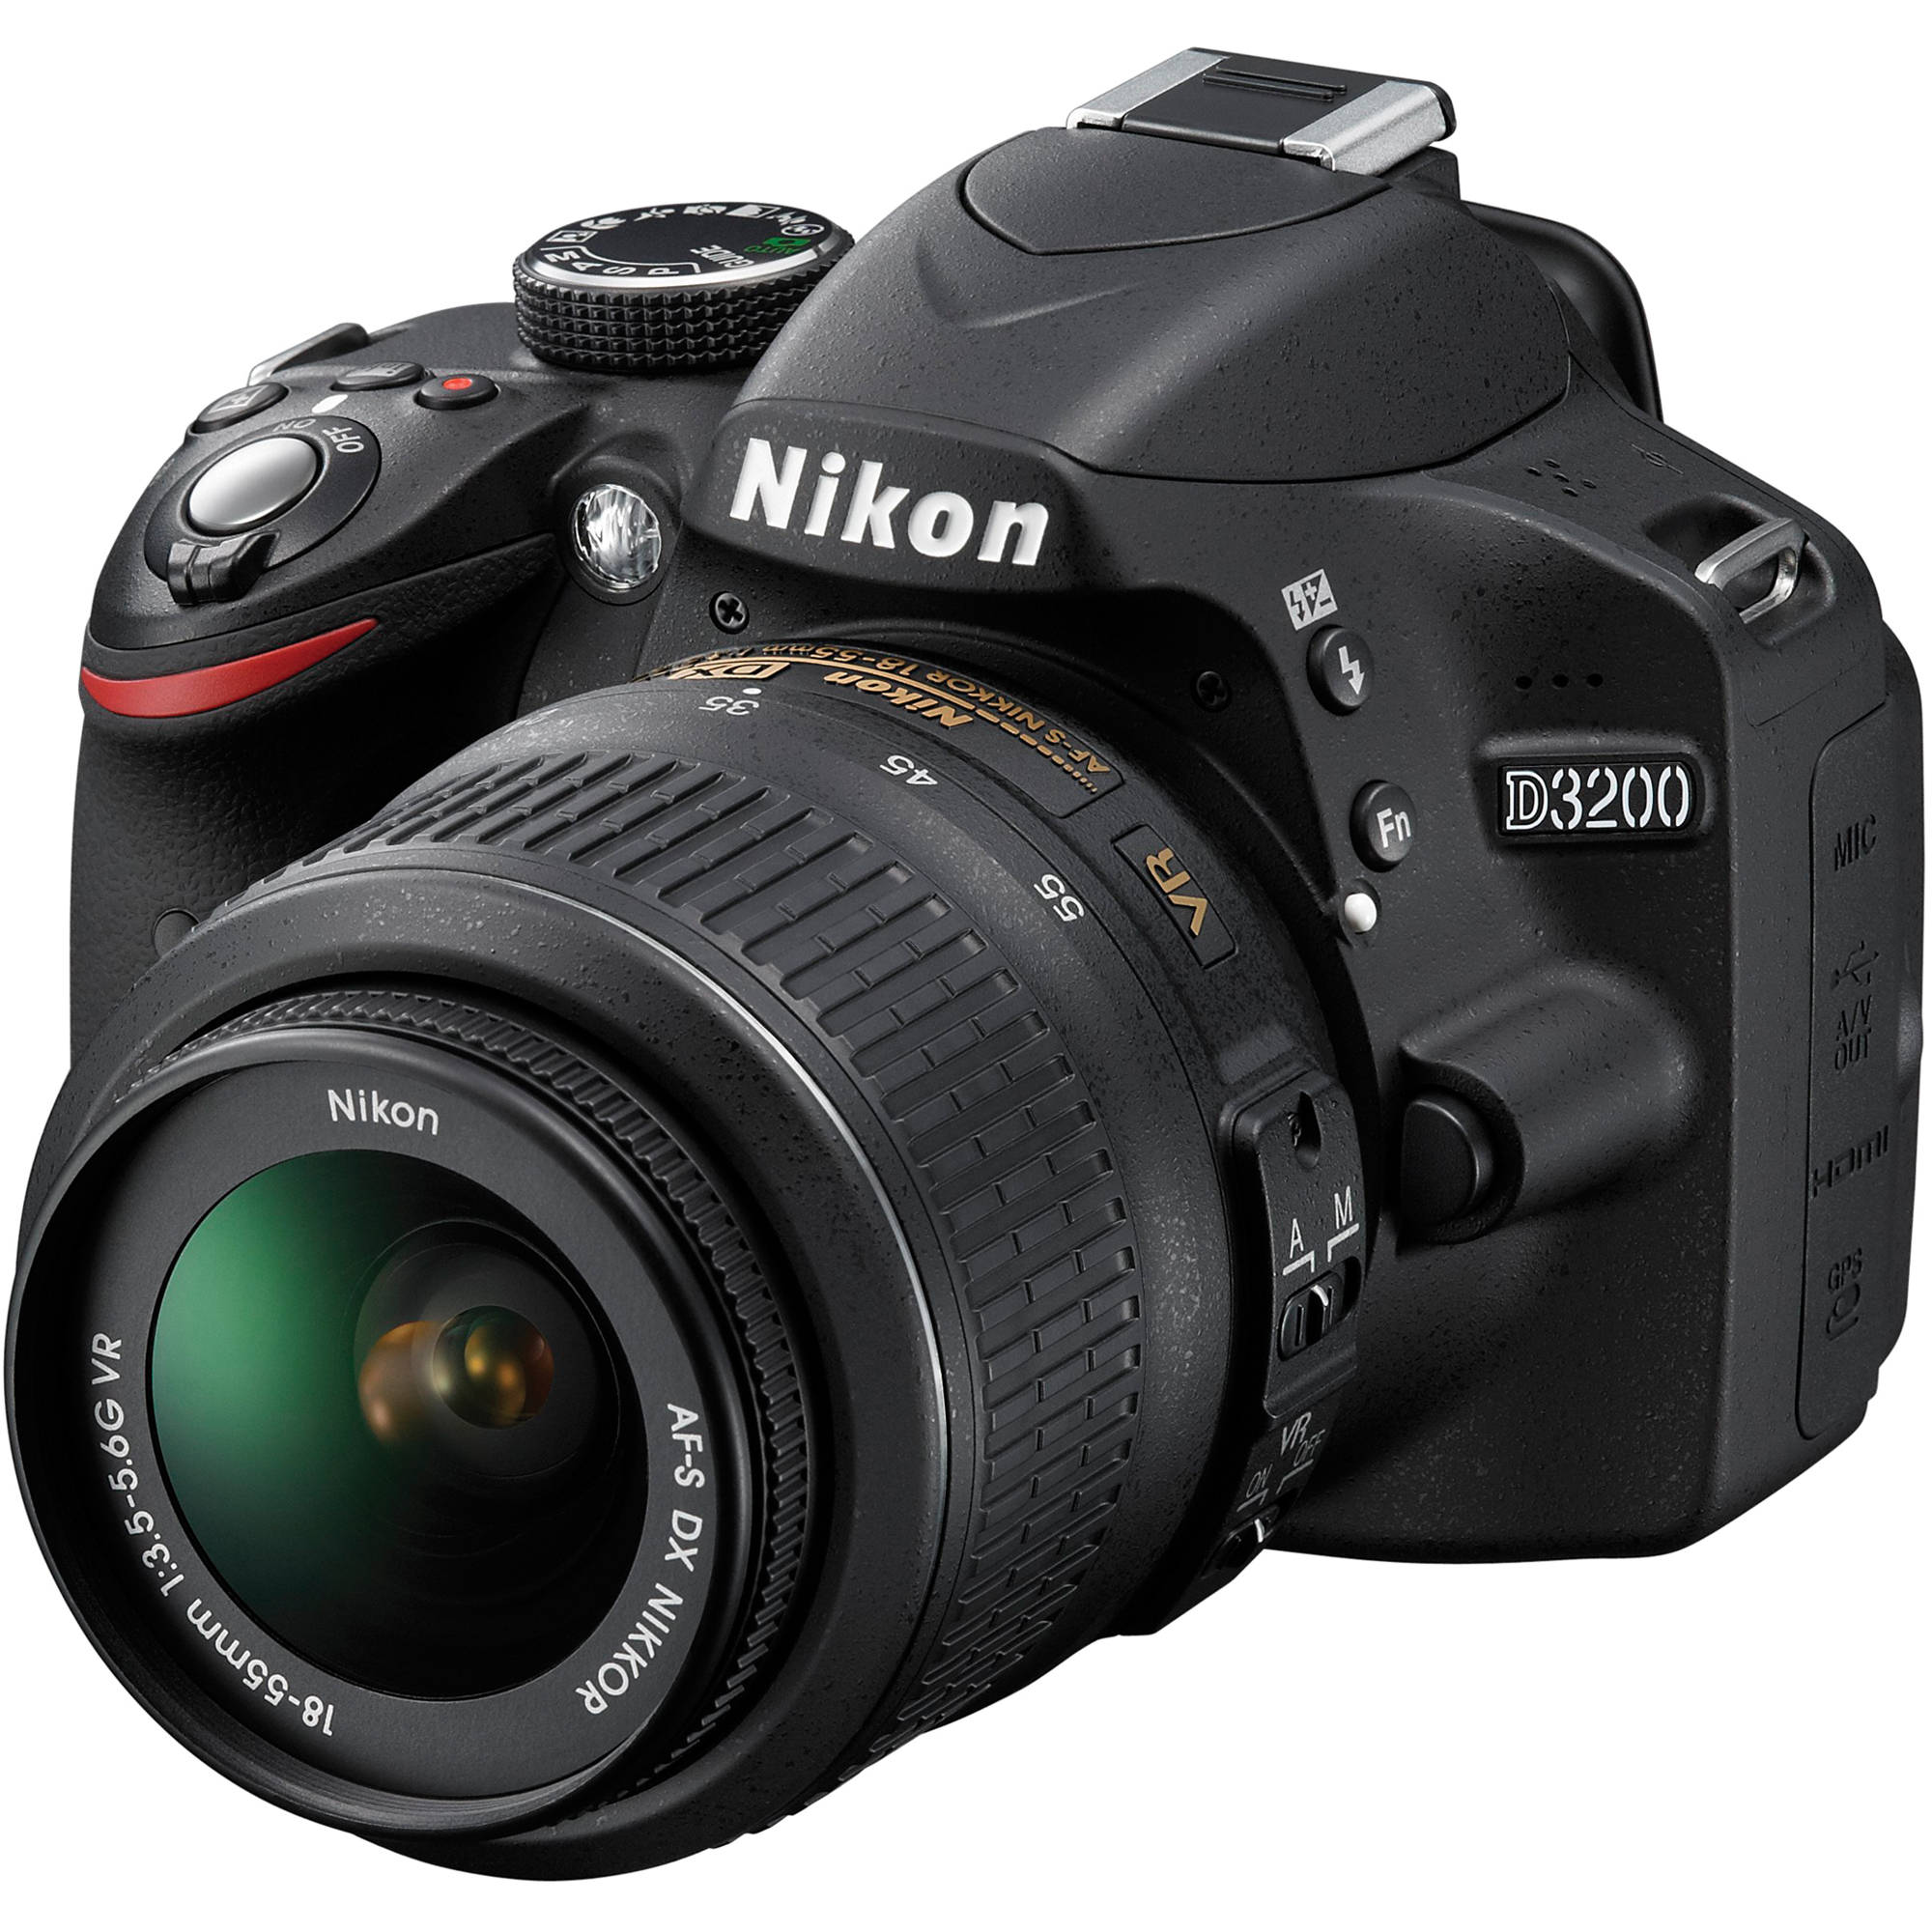 Hot Deal – Nikon D3200 w/ 18-55mm Lens for $294 ! (1 Year Nikon Warranty)